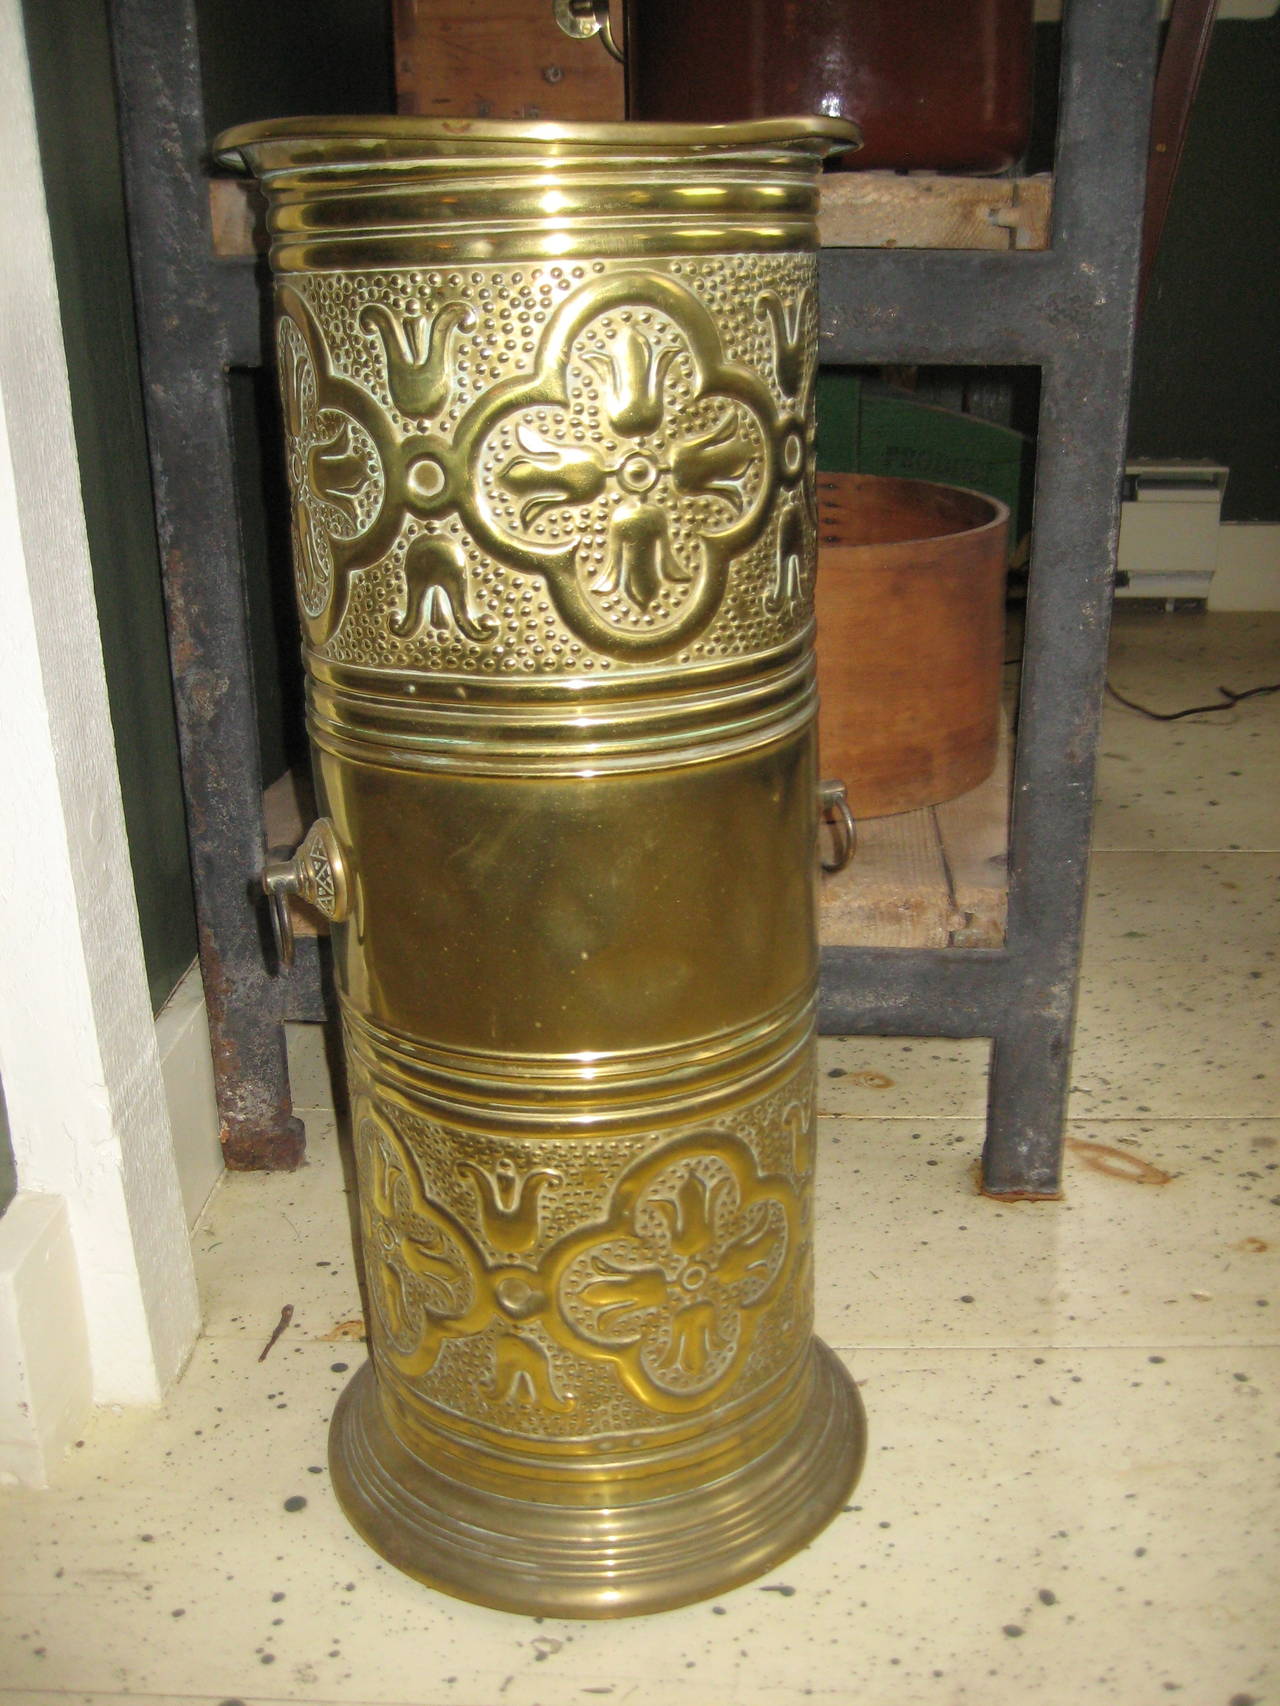 English brass umbrella stand with ornate design.